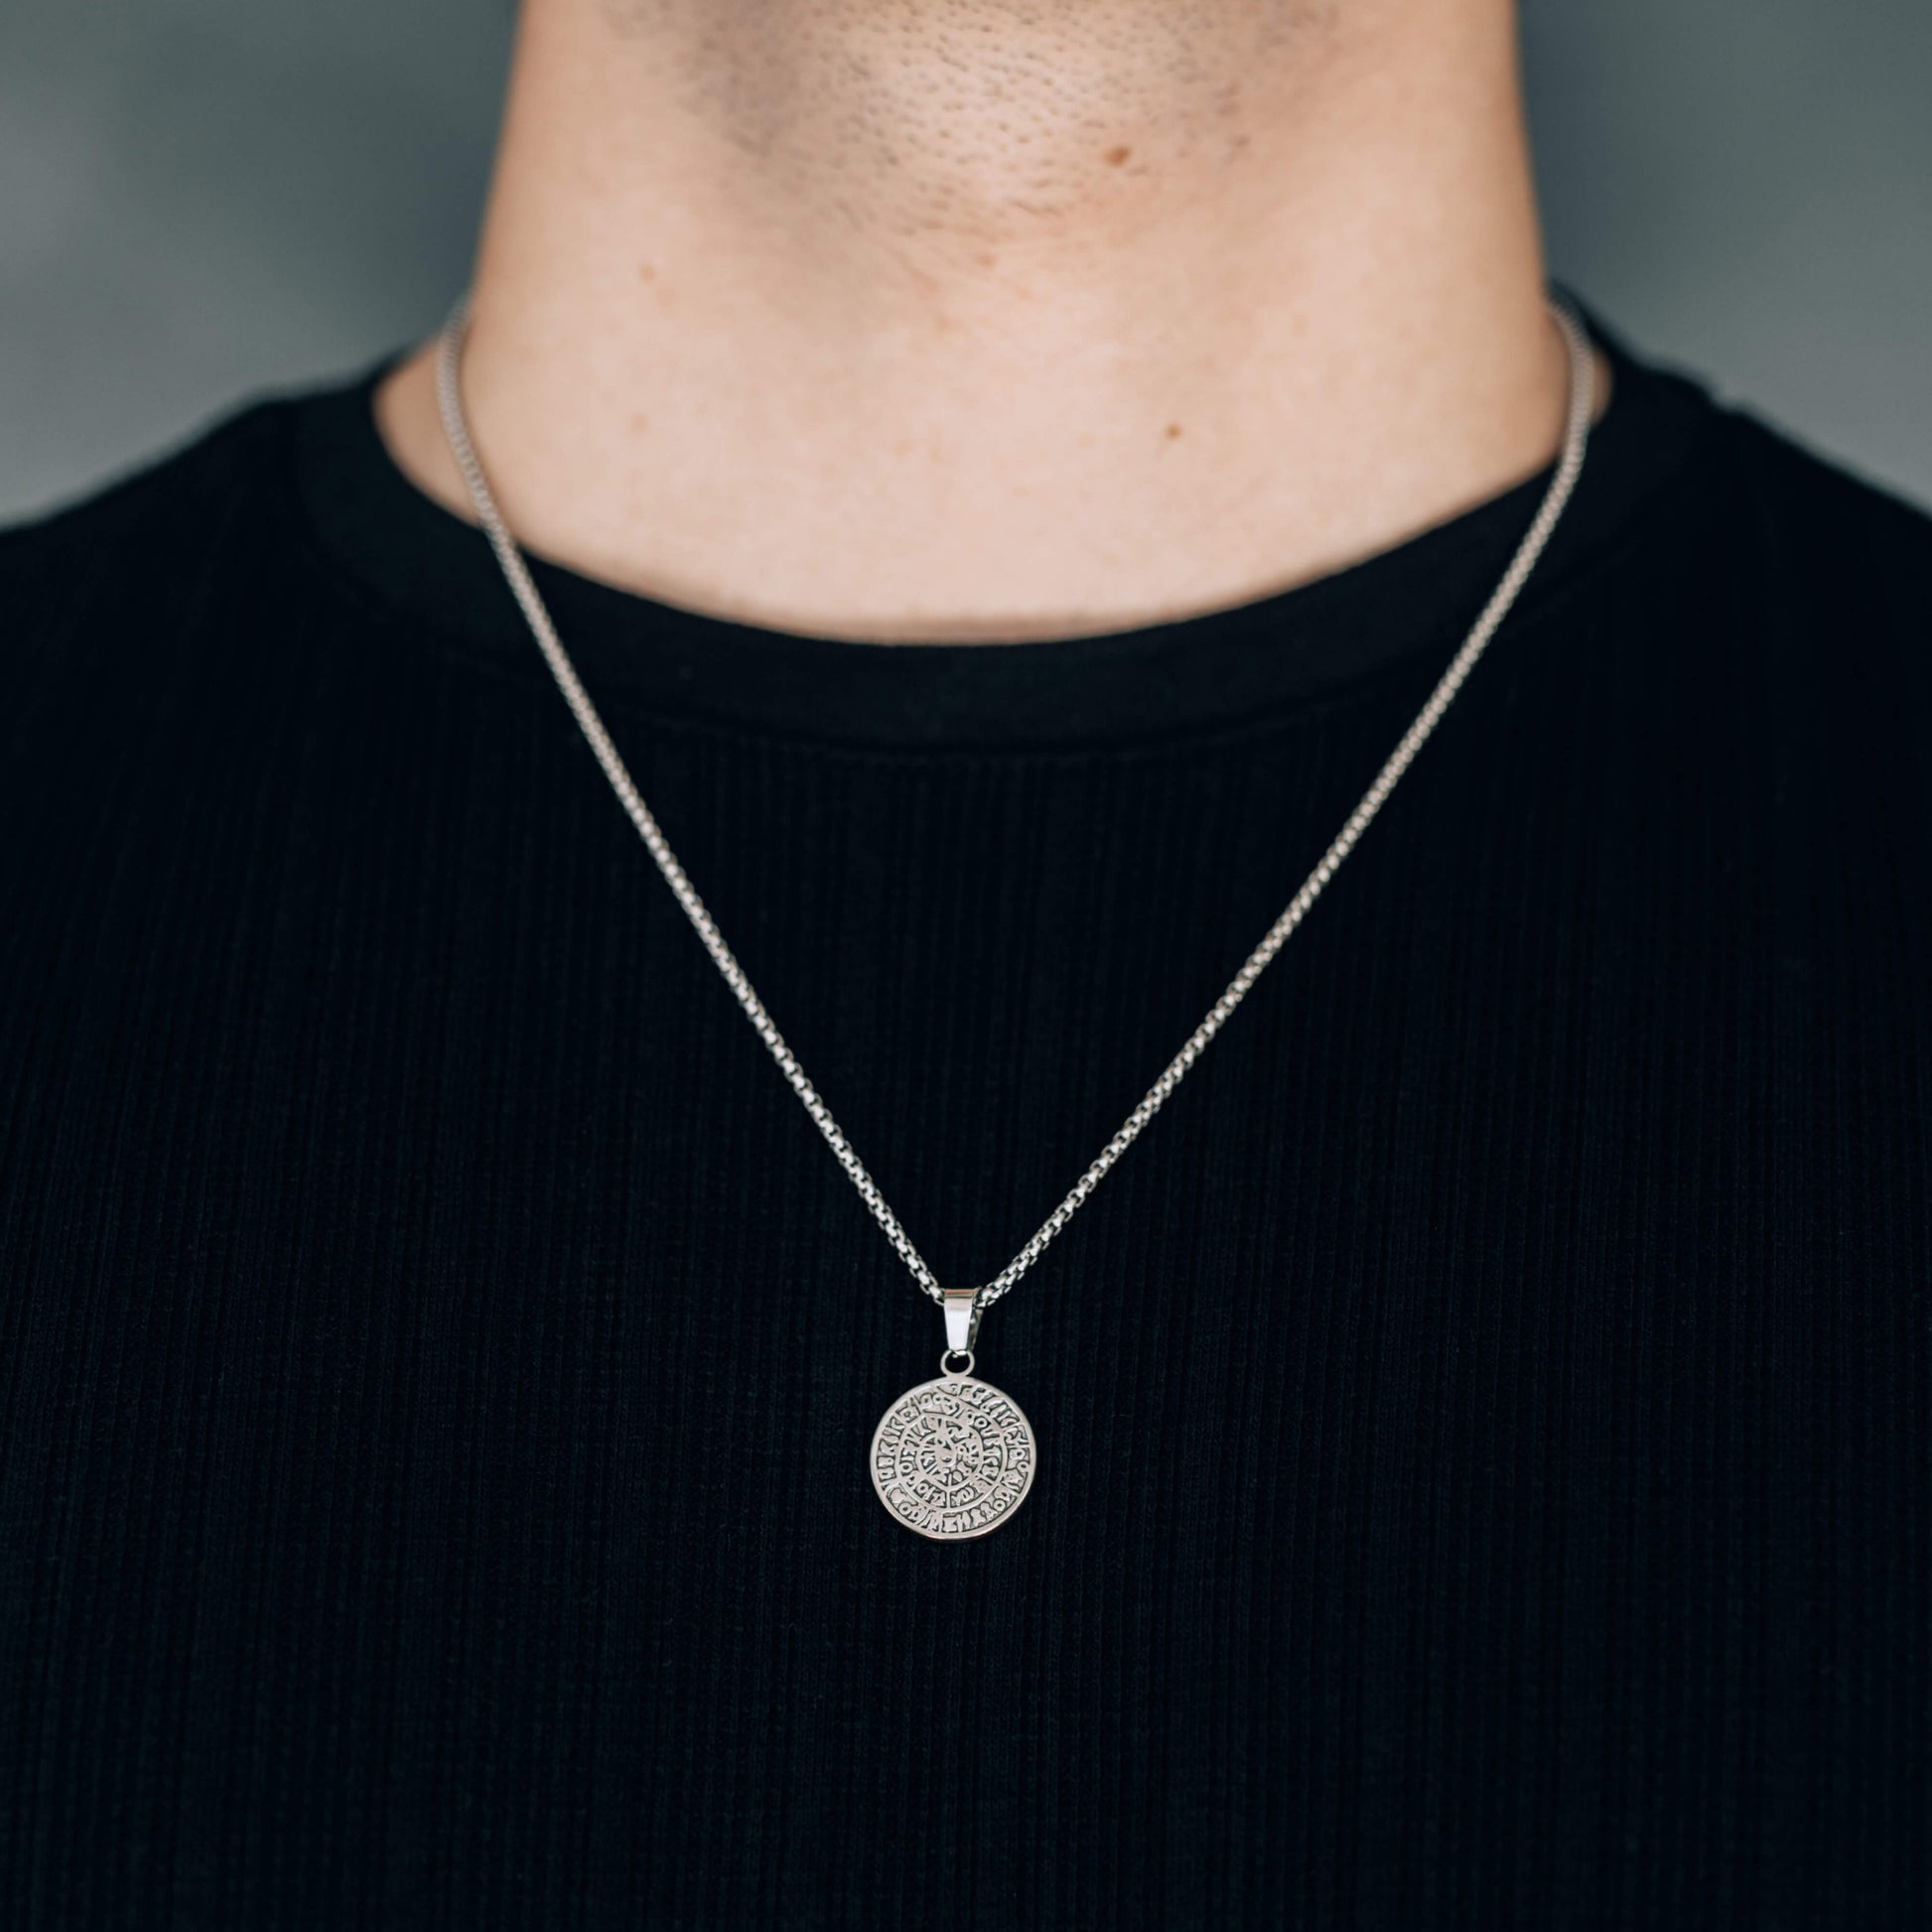 Silver Coin Pendant Necklace Box Chain For Men - Necklace - Boutique Wear RENN